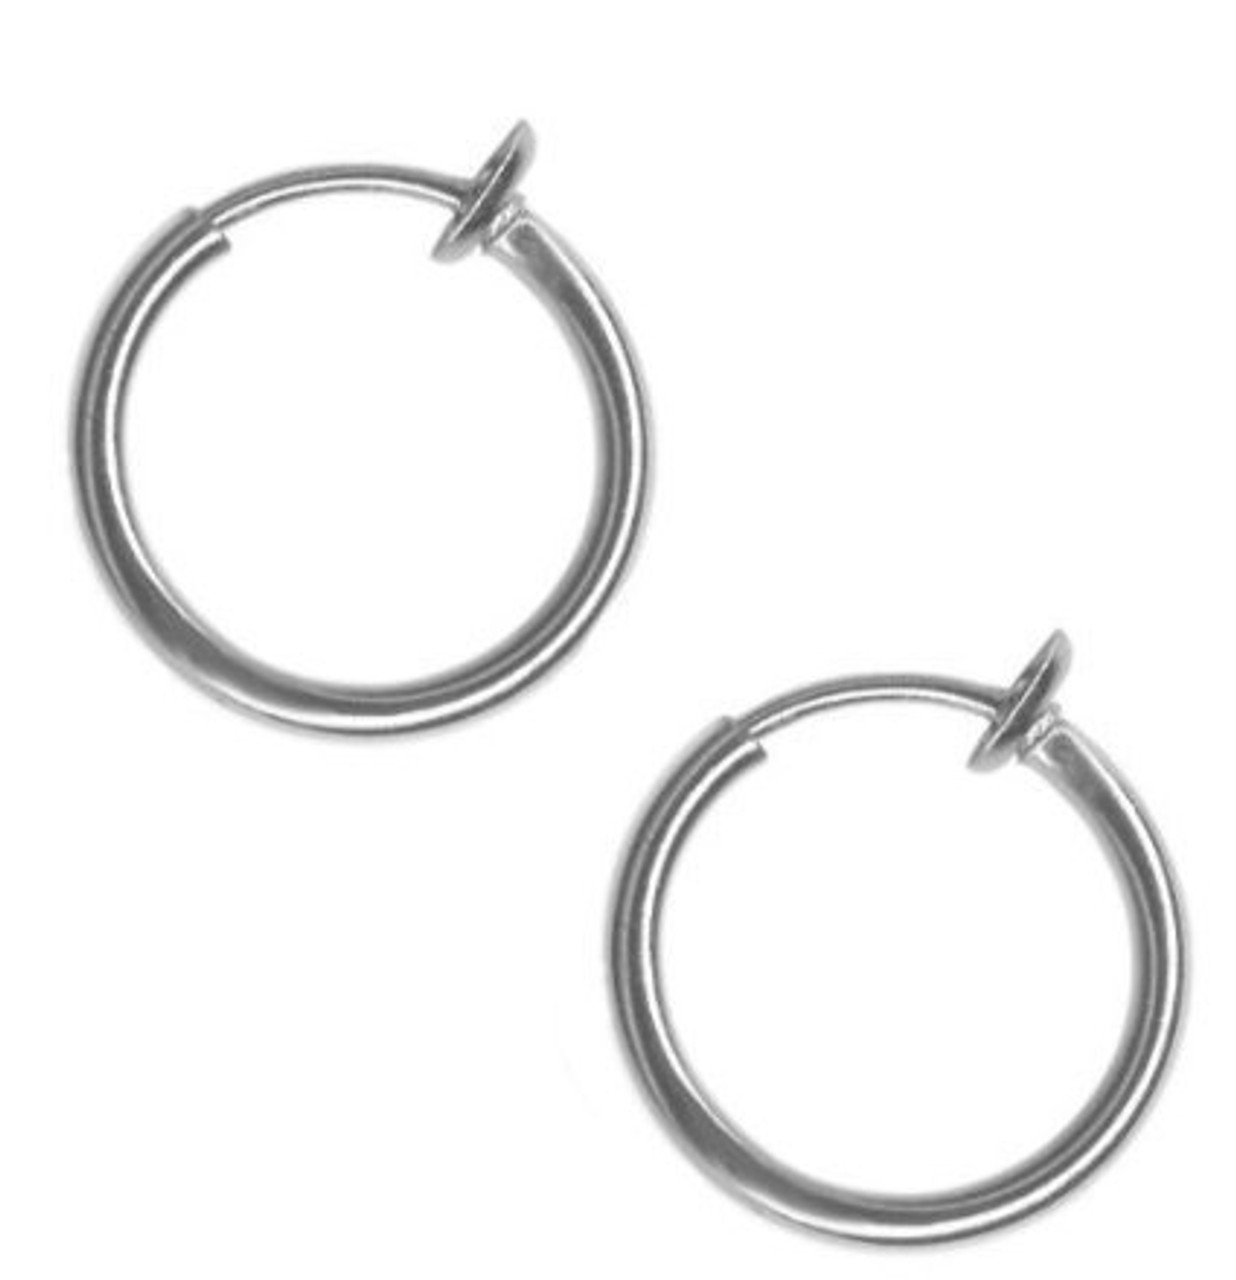 non pierced spring hoop earrings